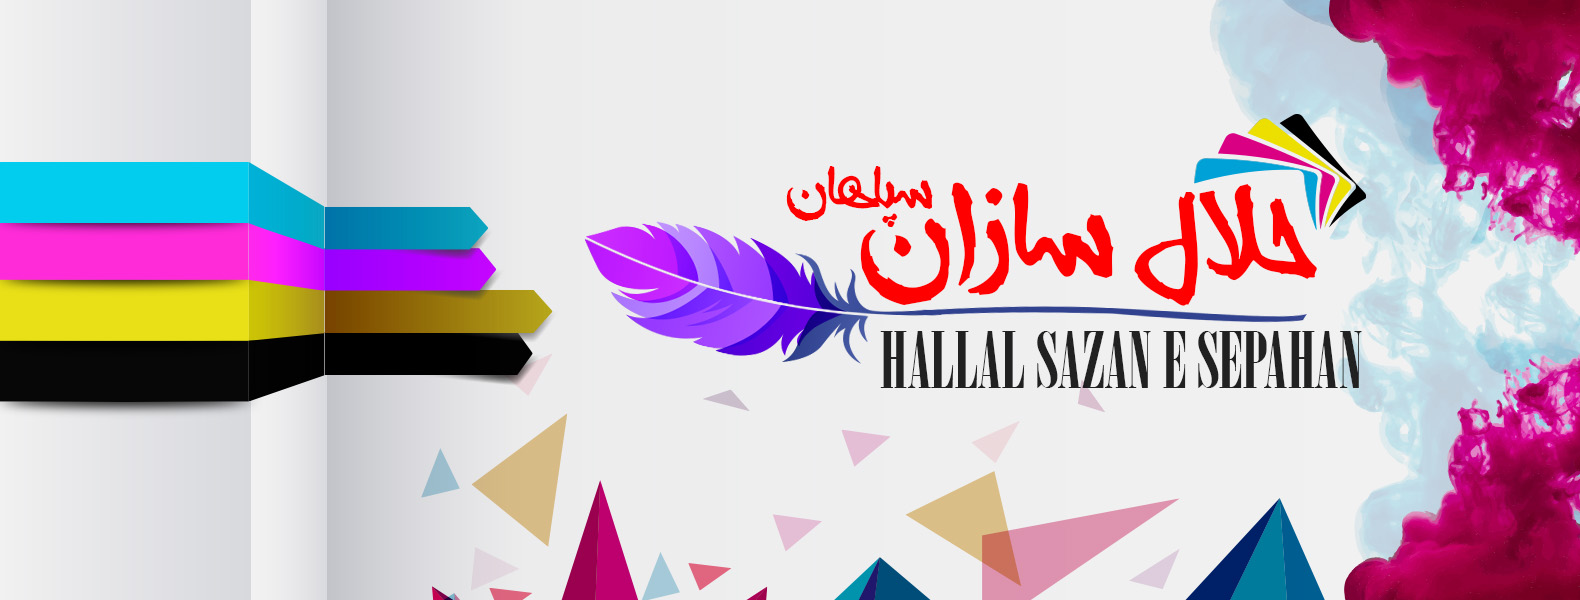 halal-sazanslide01